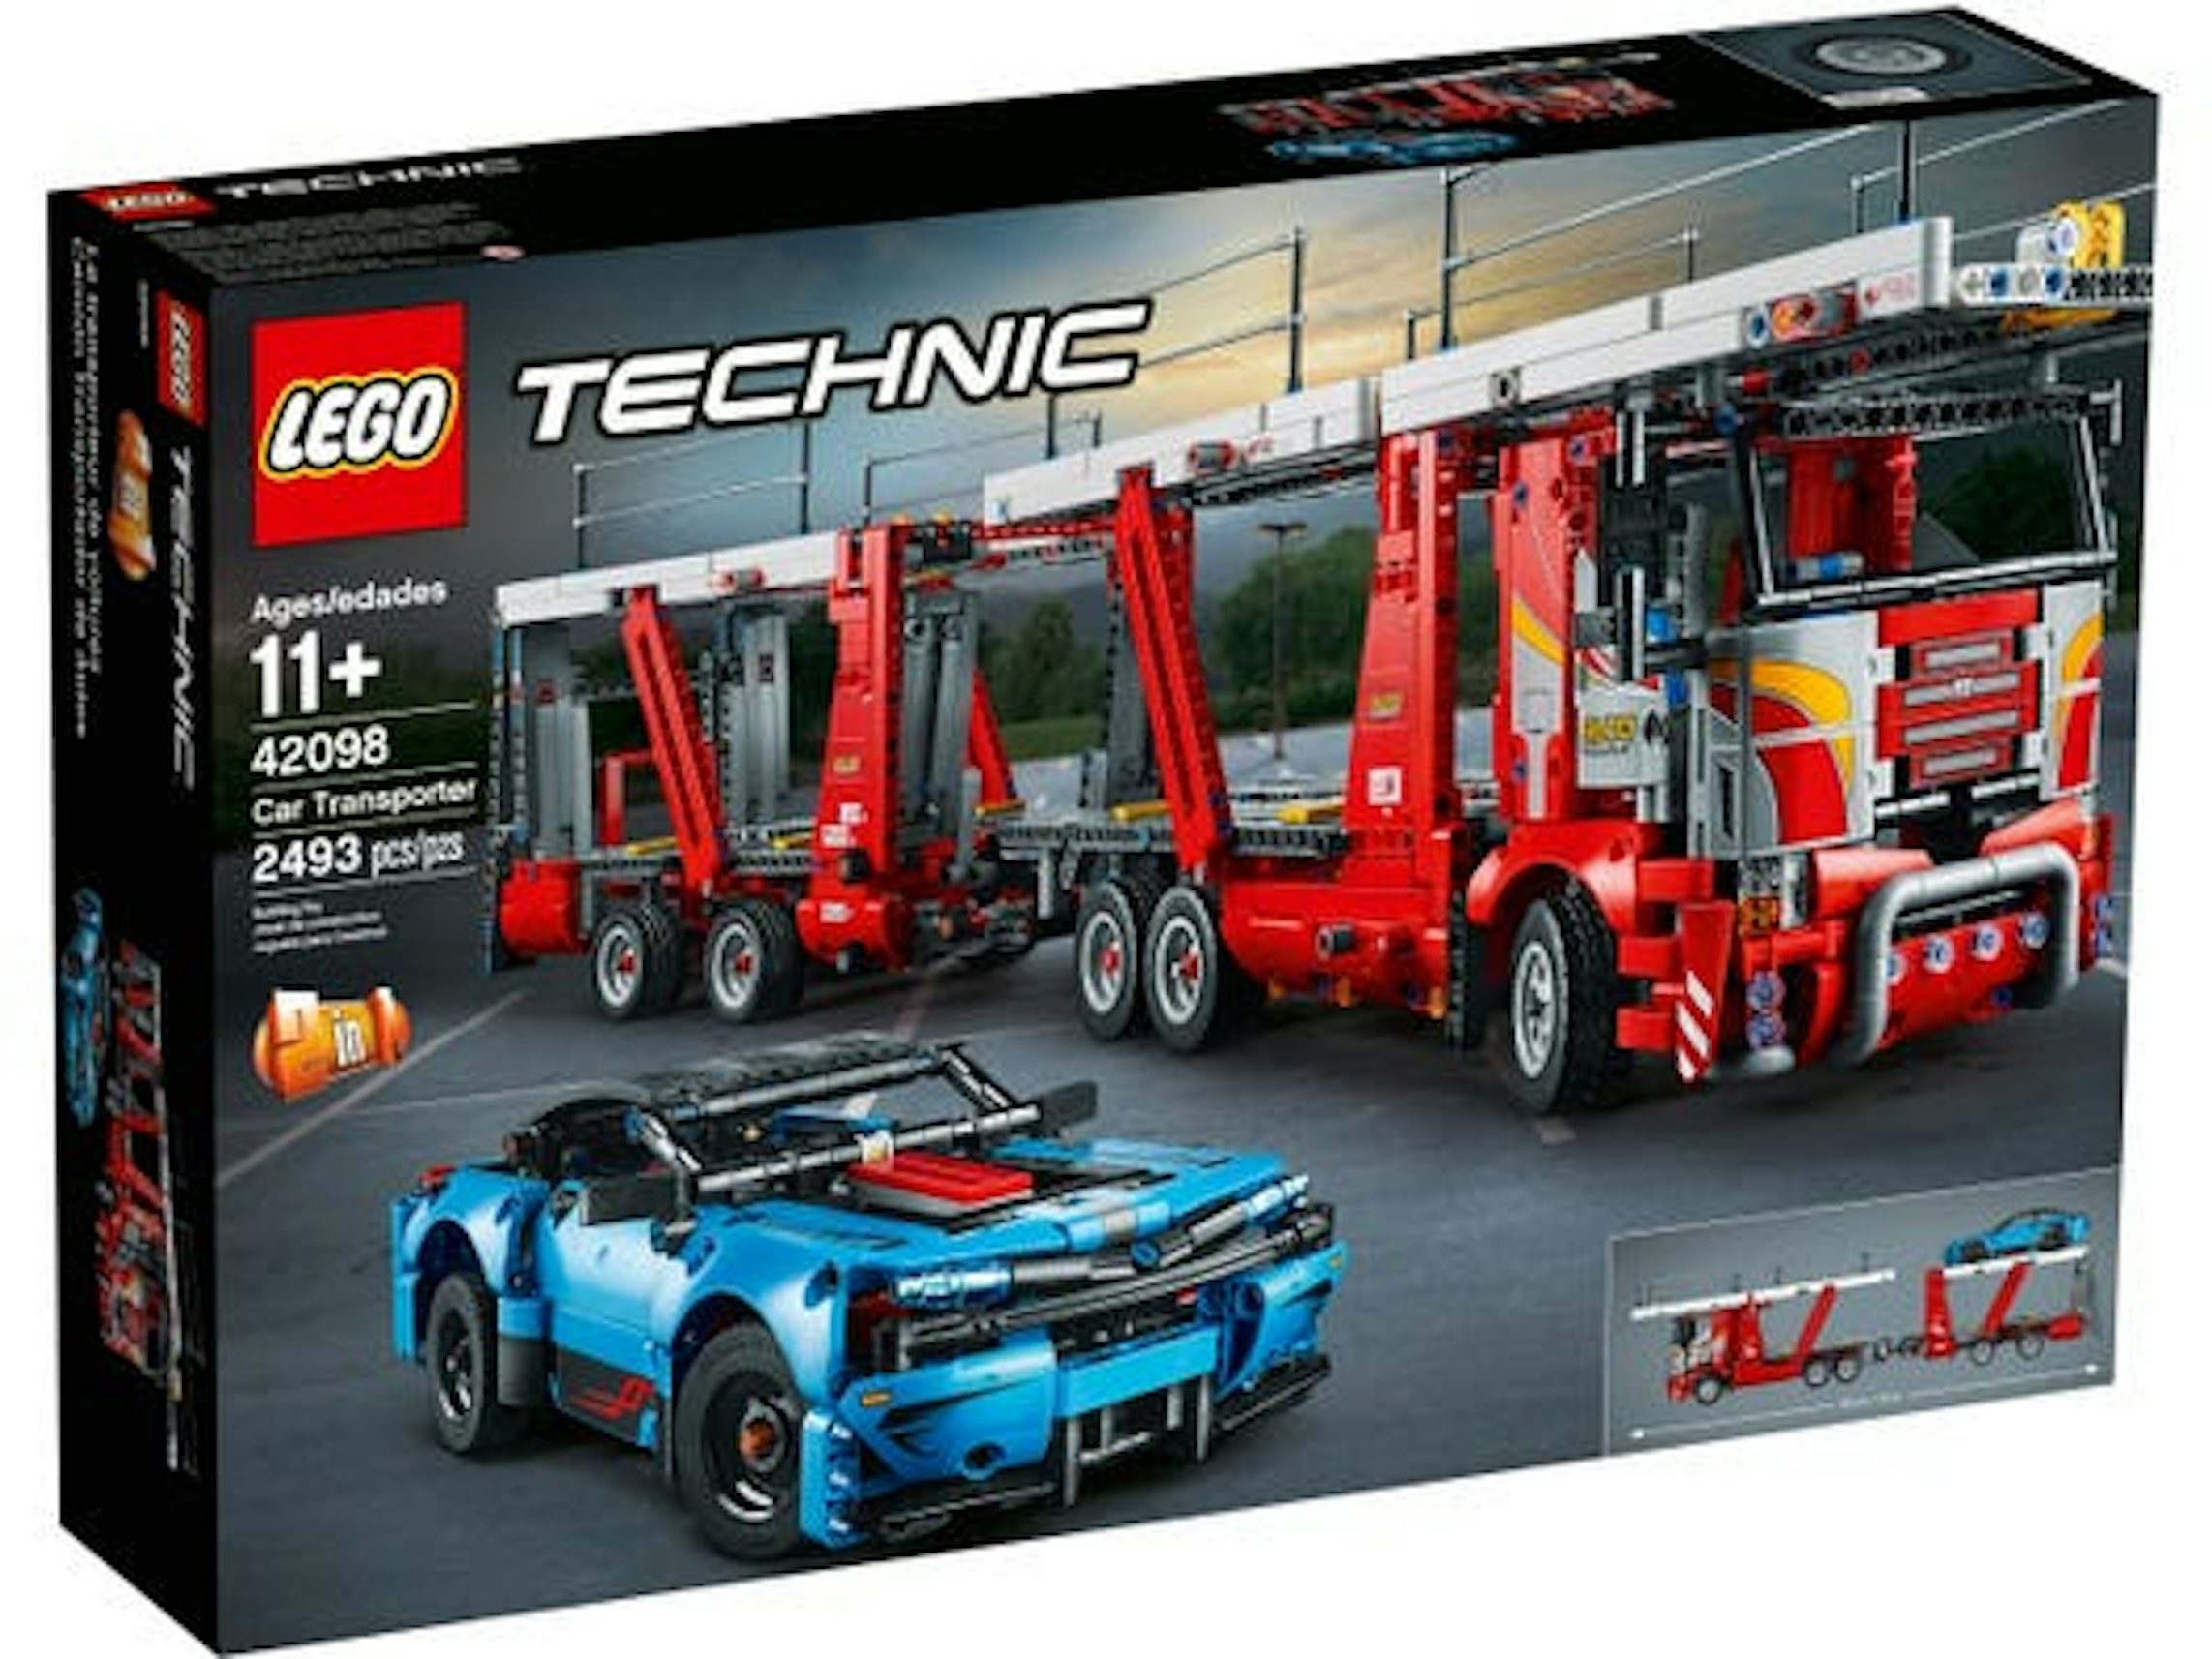 https://images.stockx.com/images/LEGO-Technic-Car-Transporter-Set-42098.jpg?fit=fill&bg=FFFFFF&w=1200&h=857&fm=jpg&auto=compress&dpr=2&trim=color&updated_at=1612291755&q=60